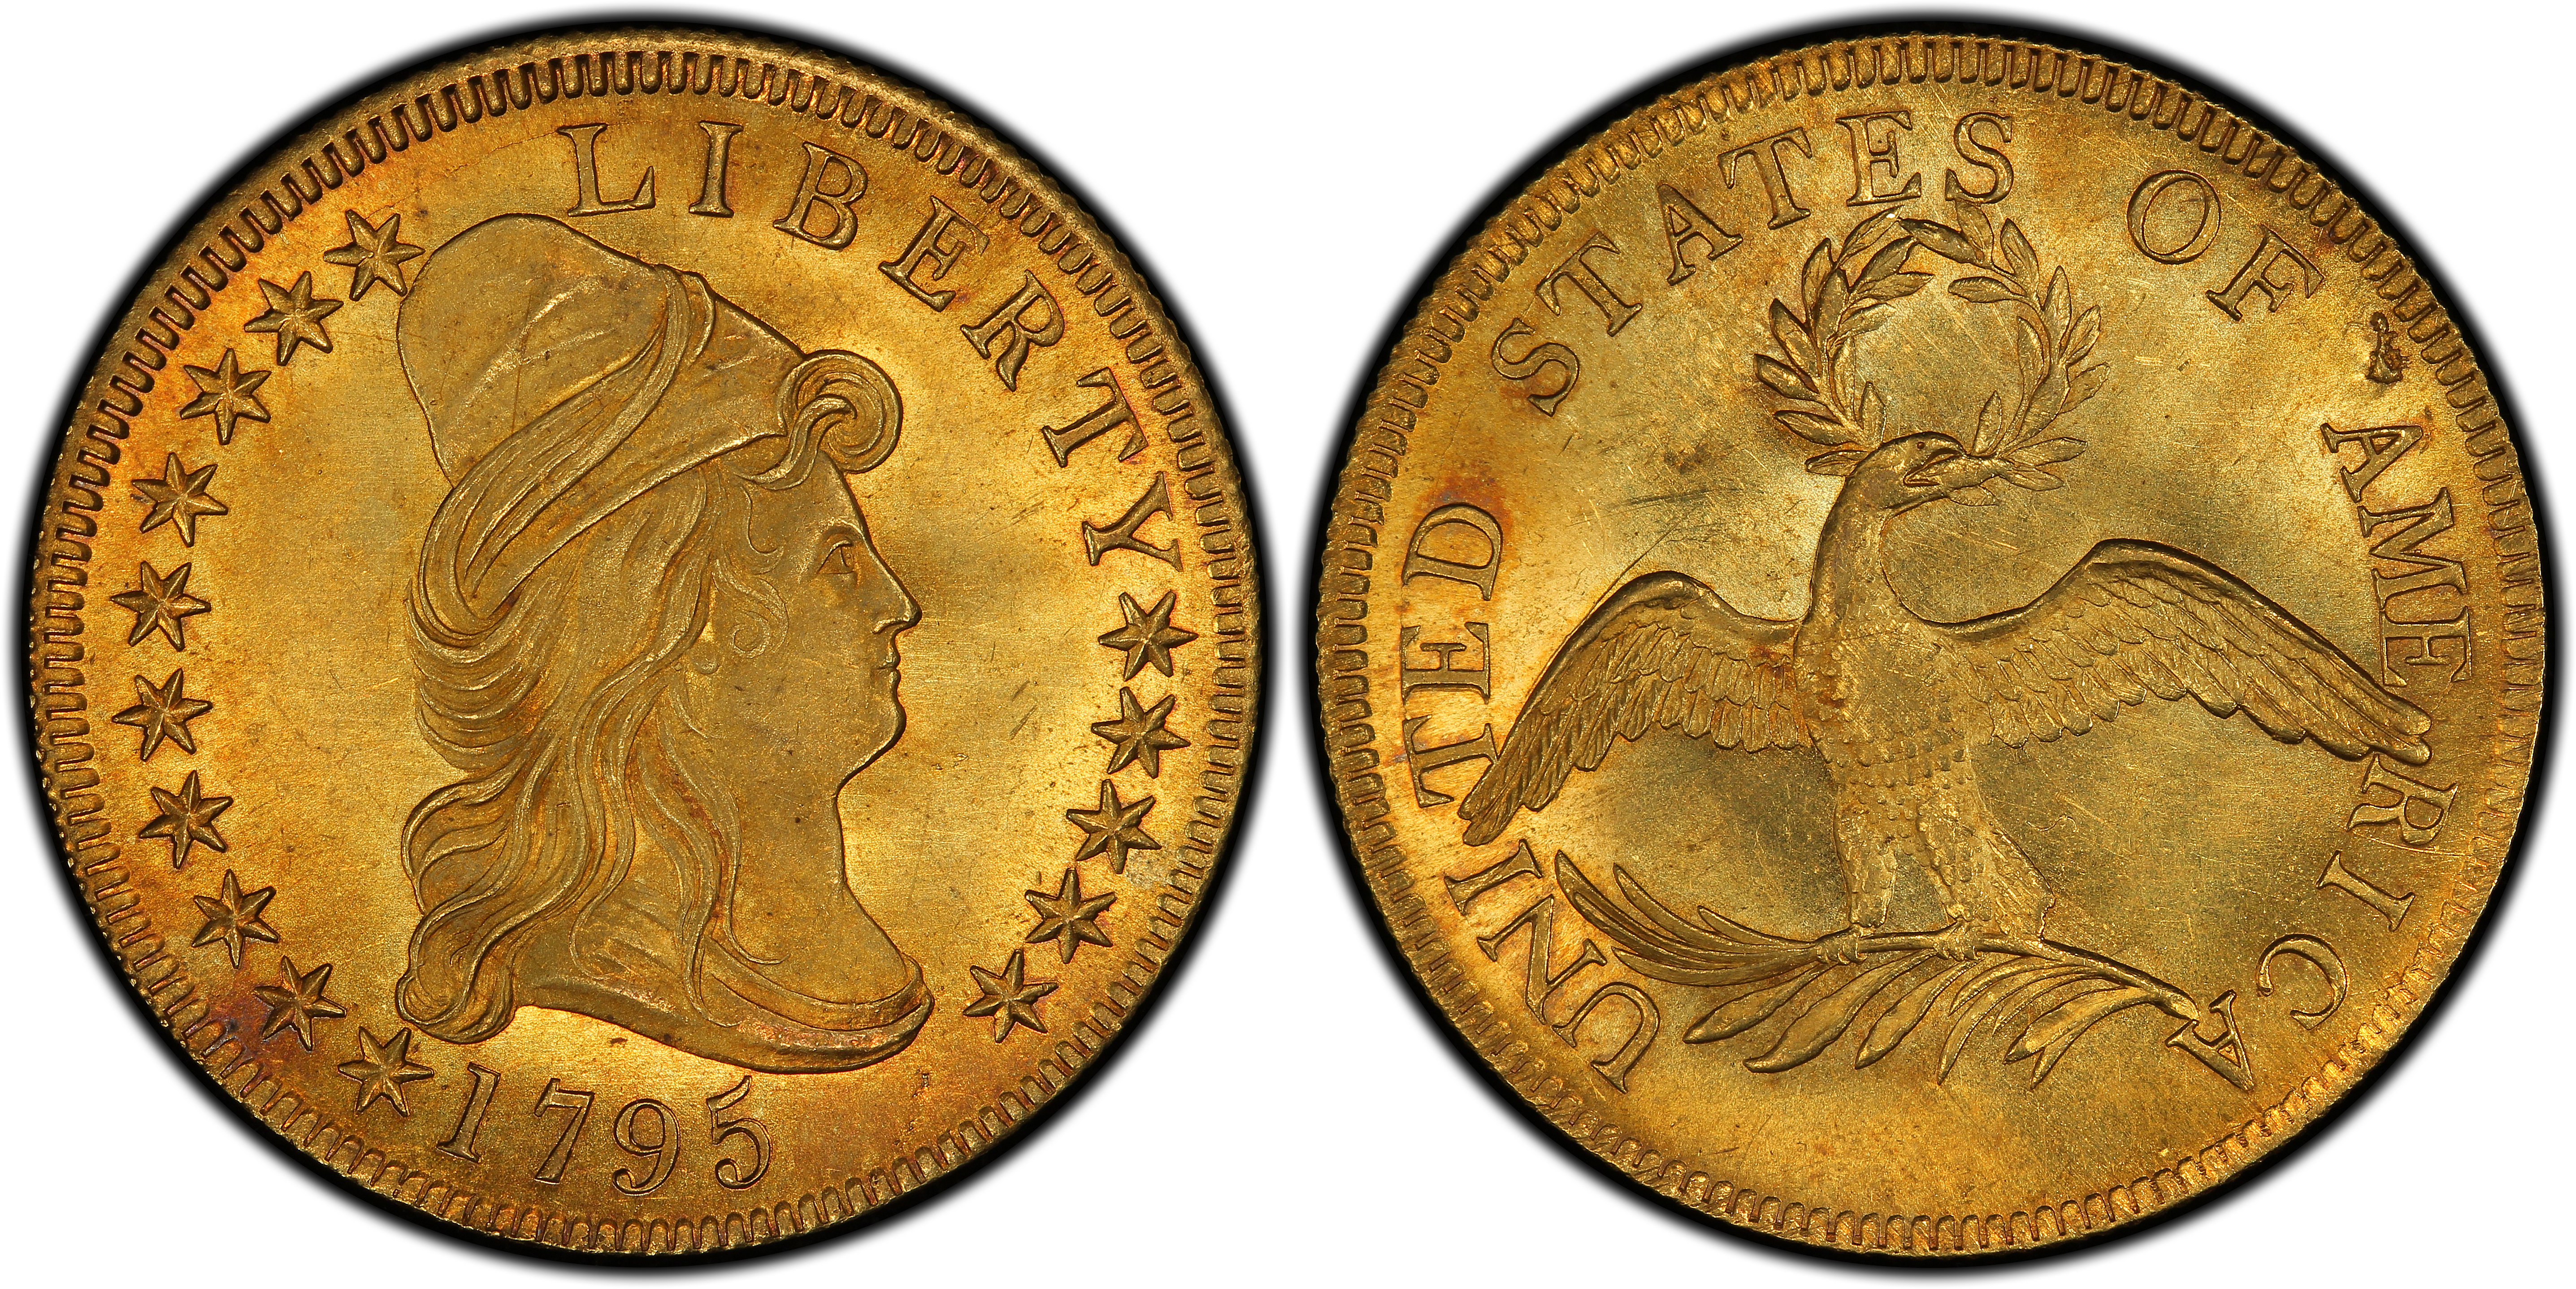 Paragon Numismatics - Gold Coins - Gold Eagle - 1795 $10.00 Draped Bust Small Eagle